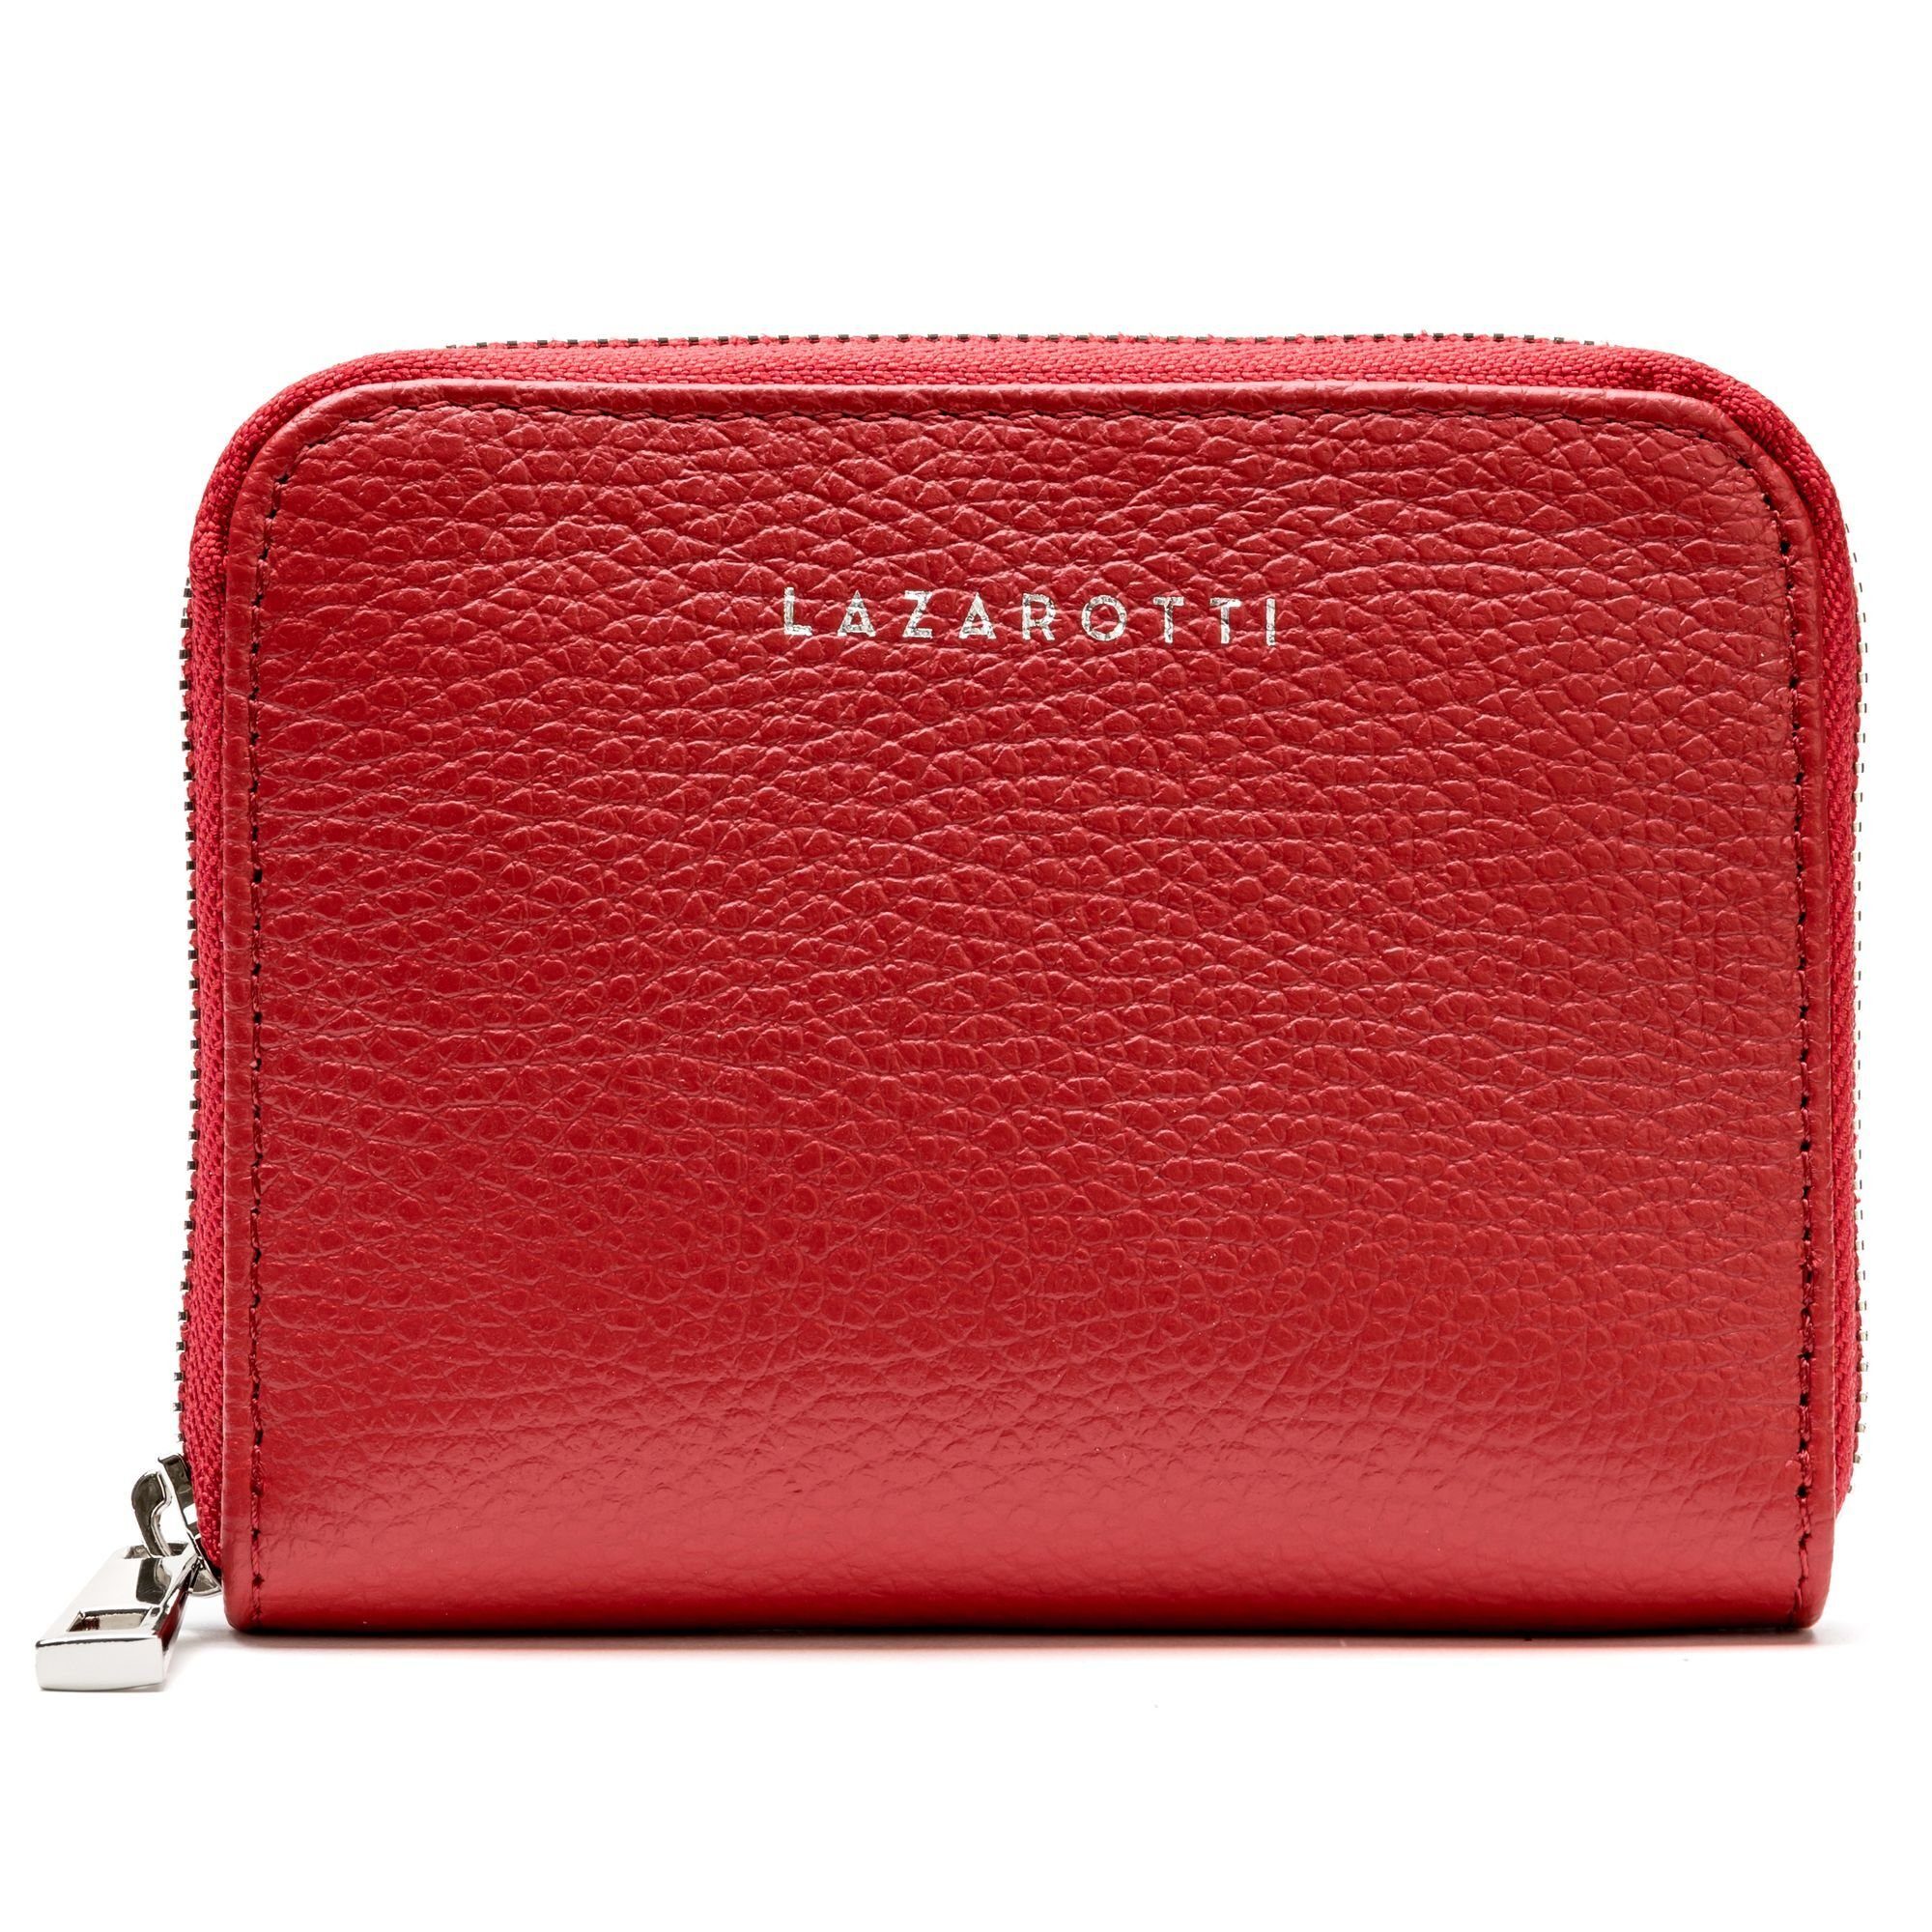 Leather, Milano Leder Geldbörse red Lazarotti